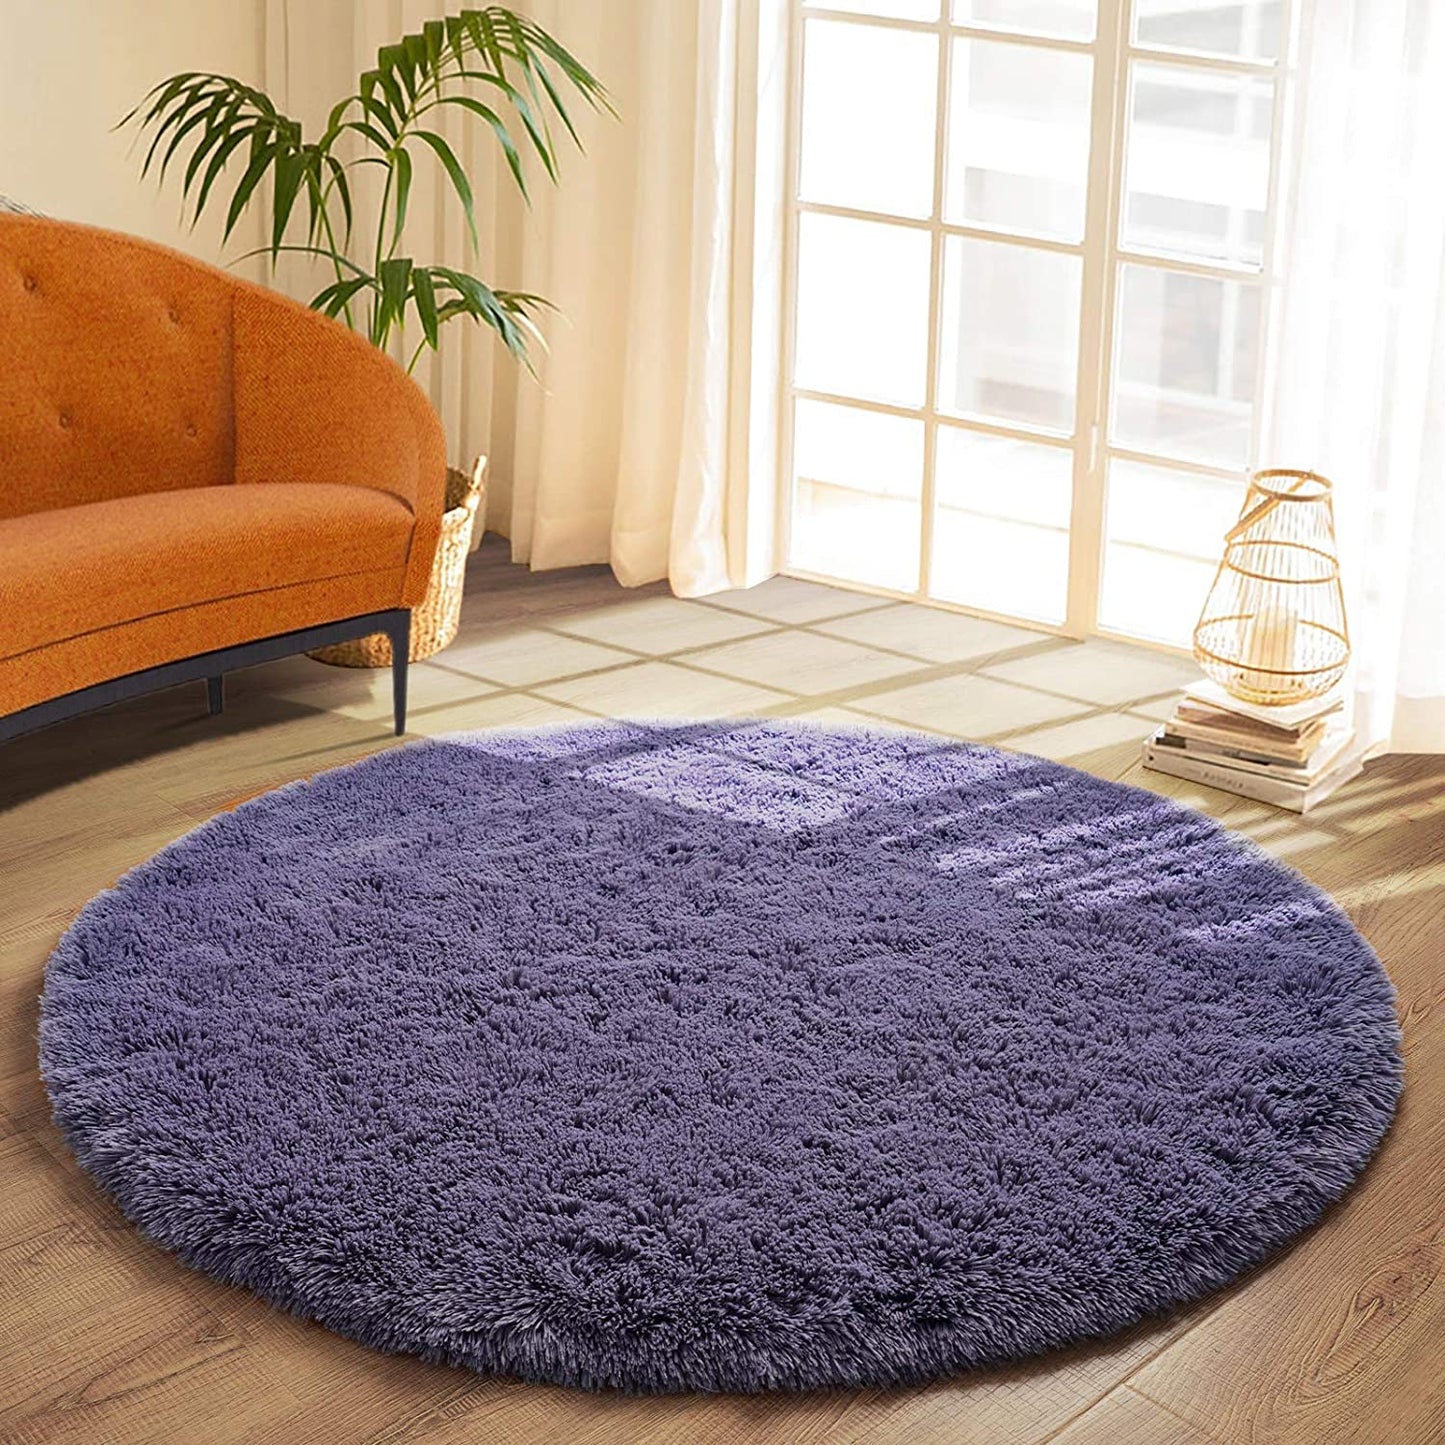 Round plush carpet for Bedroom